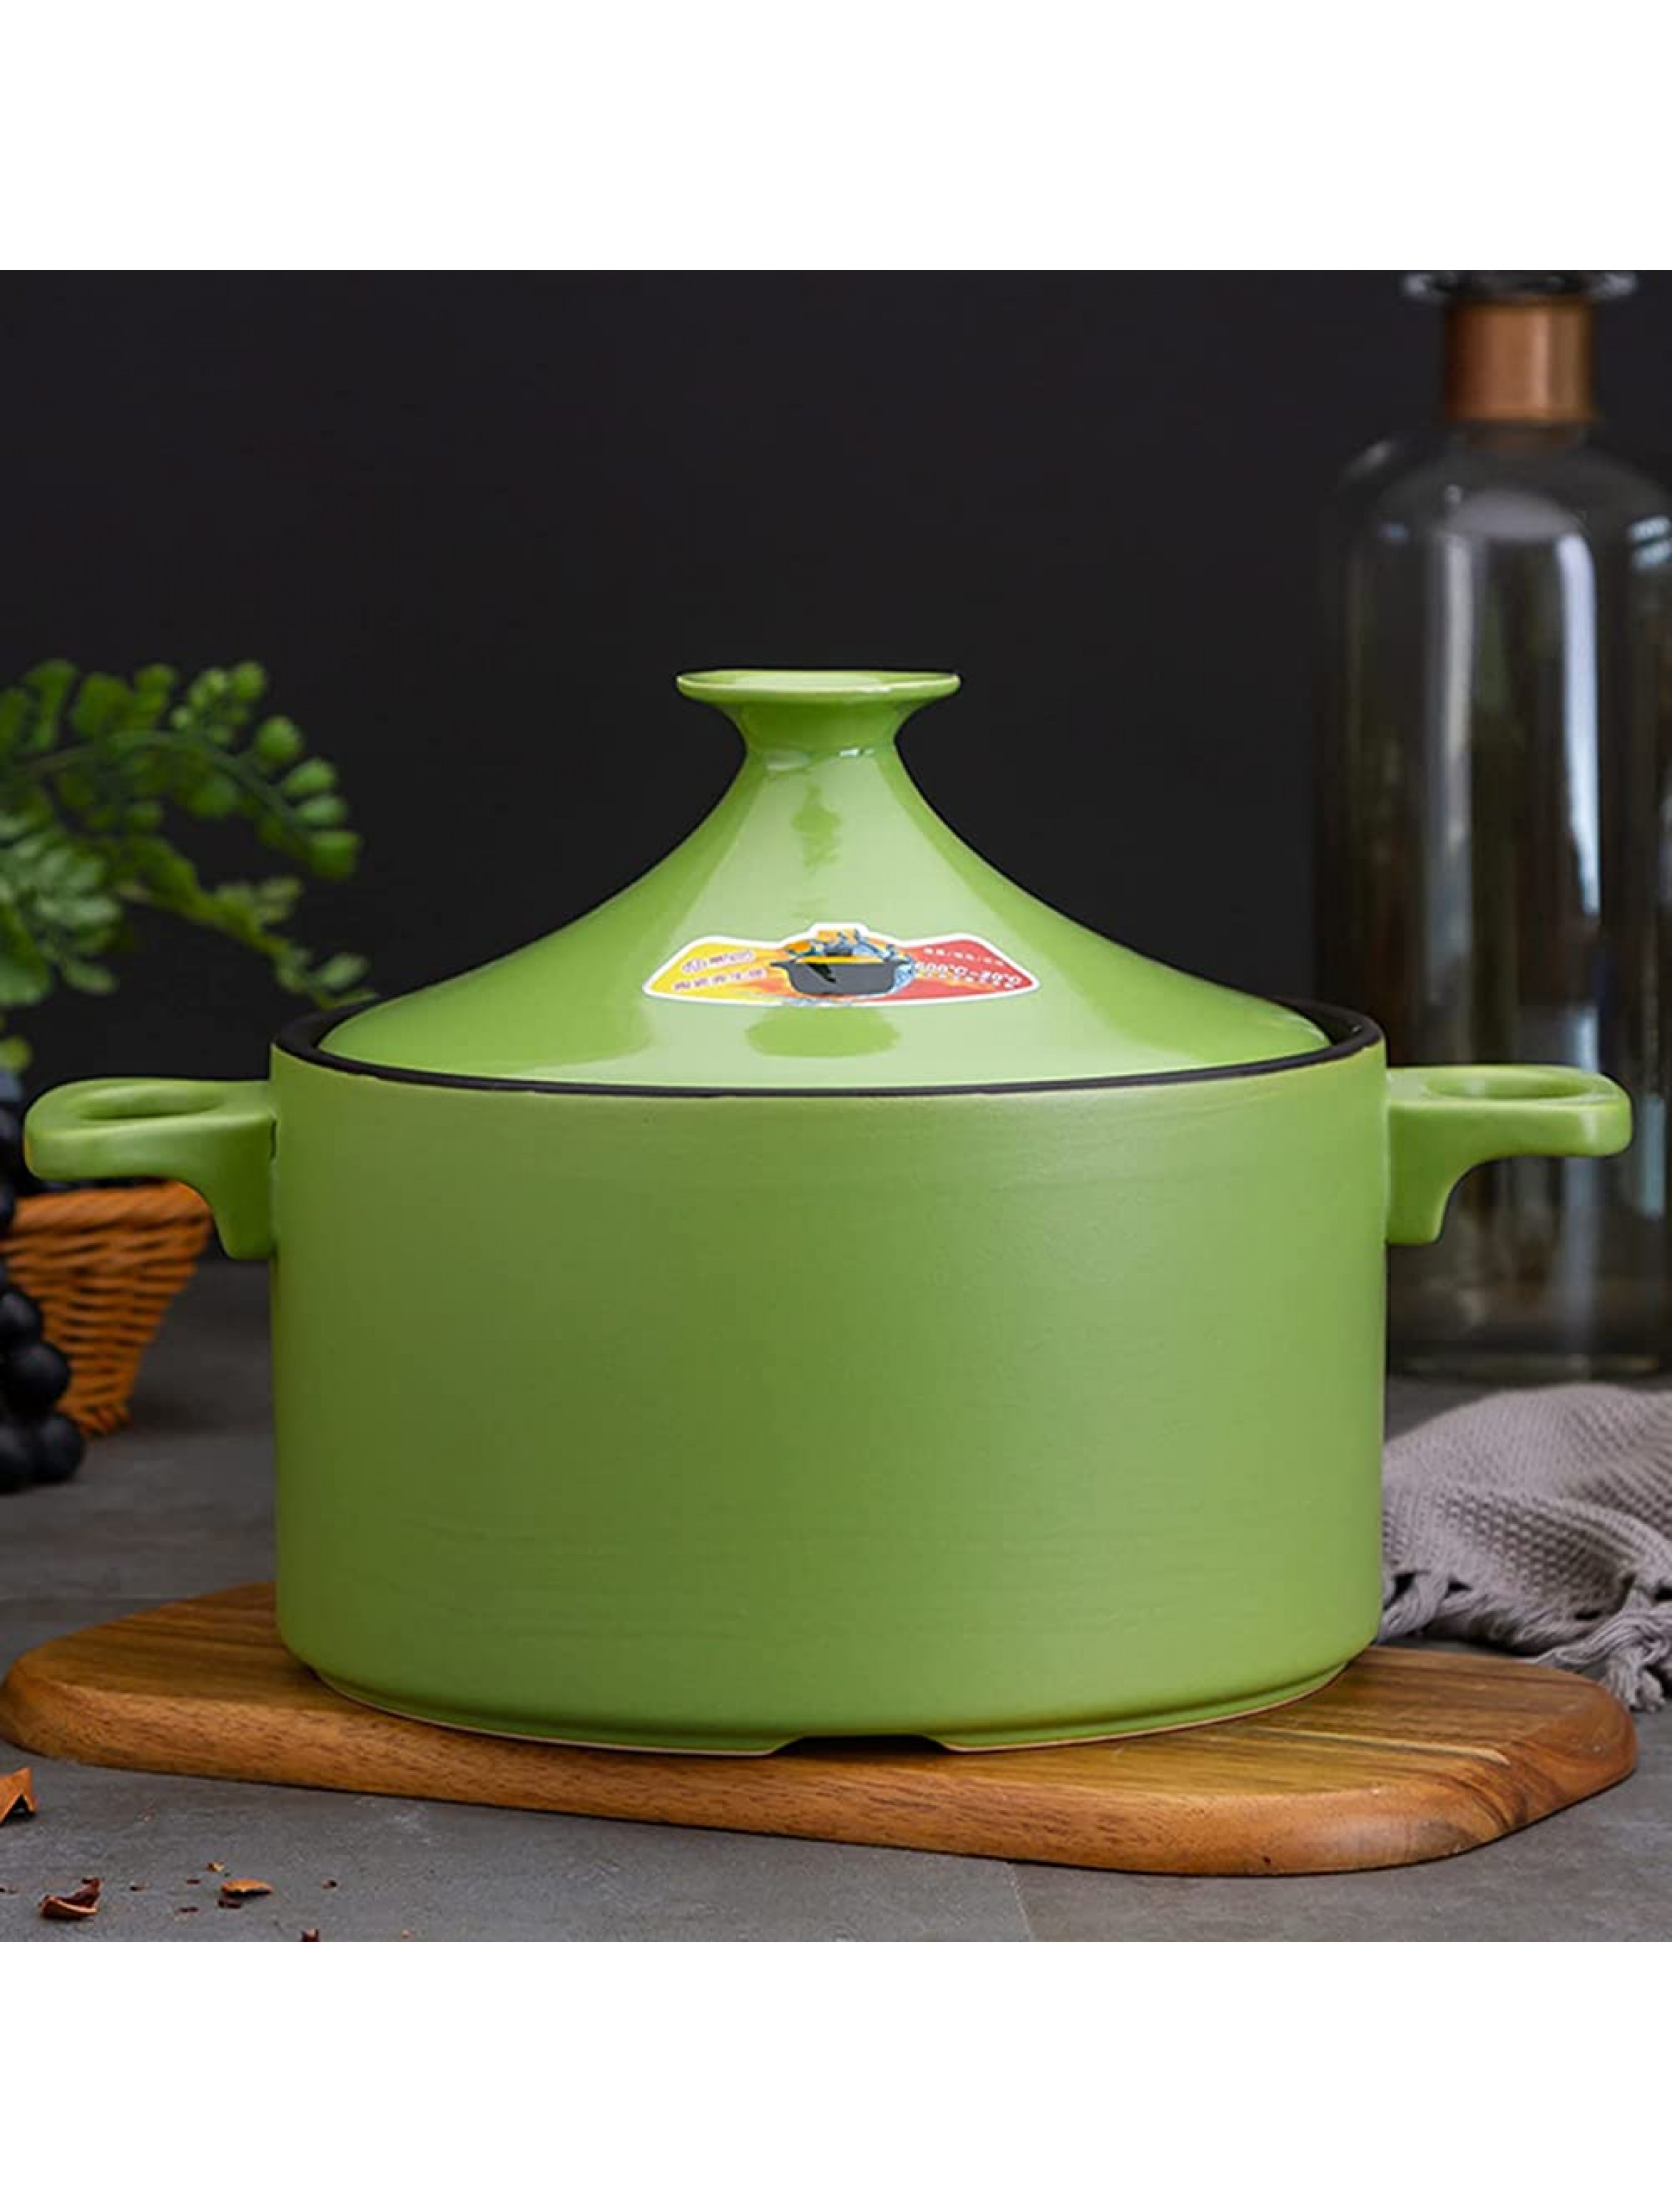 oiakus Steamer Bra Braise Pan Moroccan Tagine Cooking Pot Handmade Ceramic Casserole 4L Tagine Ceramic Pot Healthy Clay Pot for Braising Slow Cooking - BPXHV0MVX